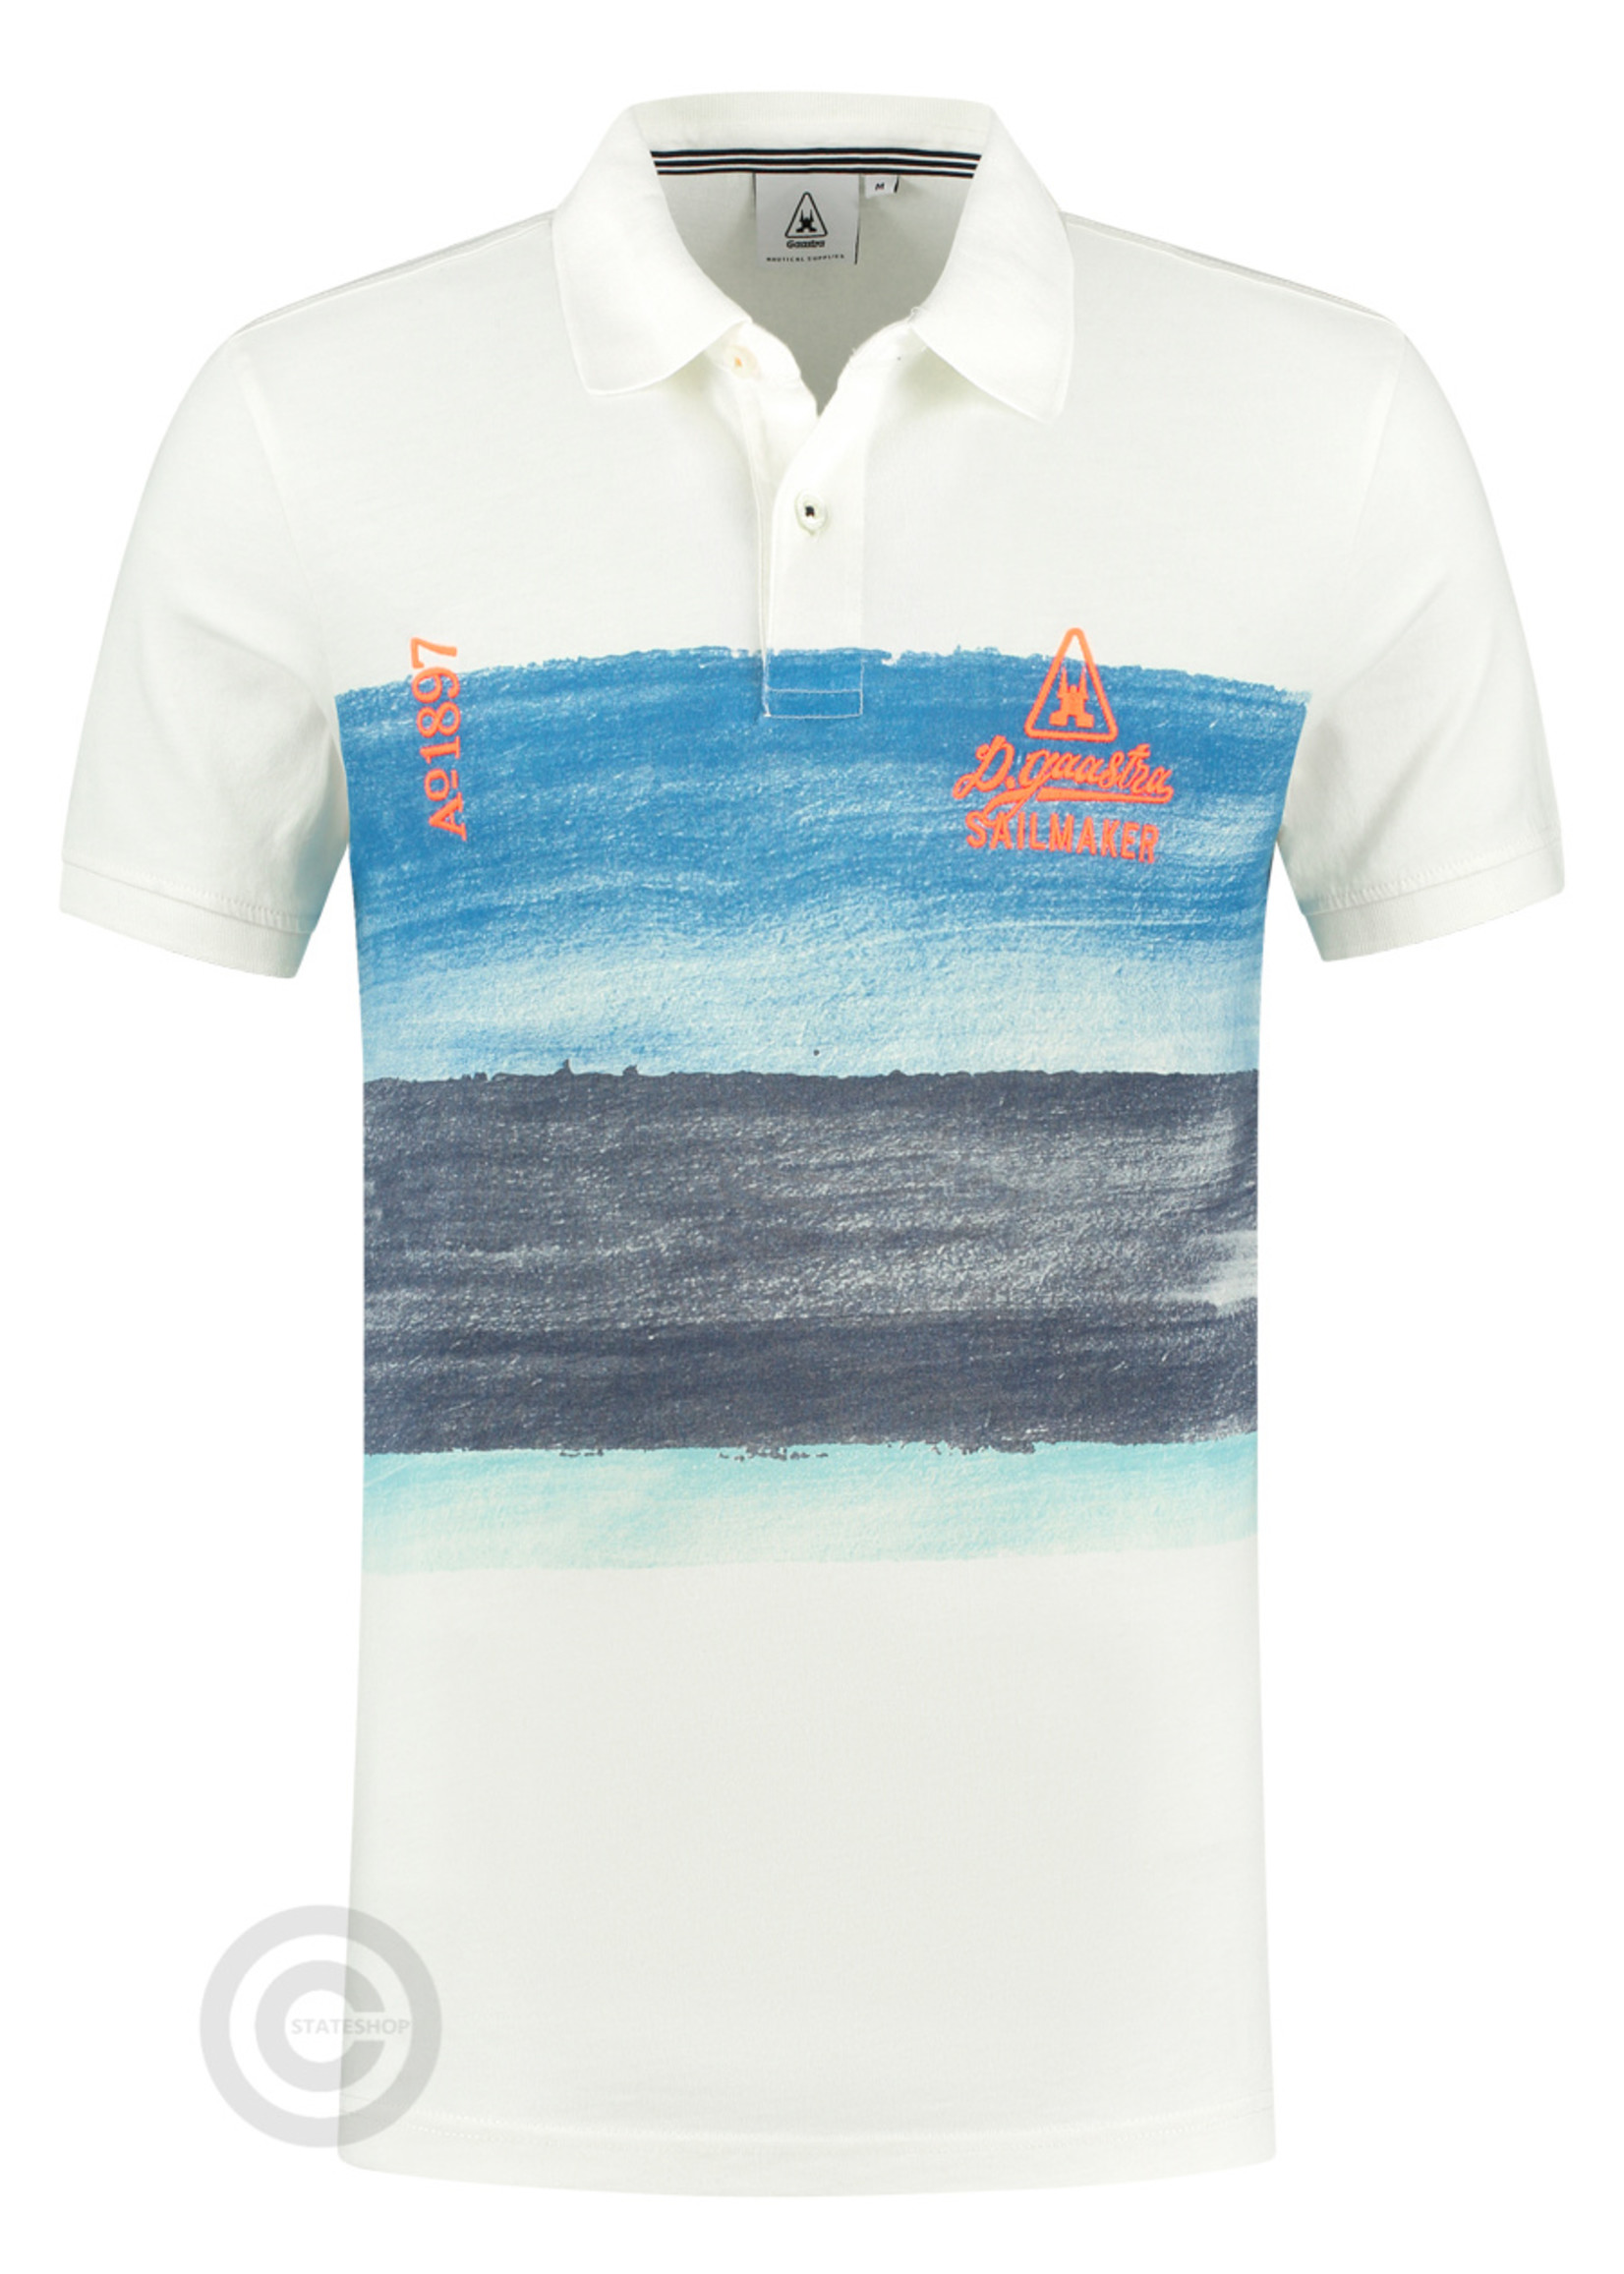 Gaastra Gaastra men's polo shirt "Sailmaker" off-white